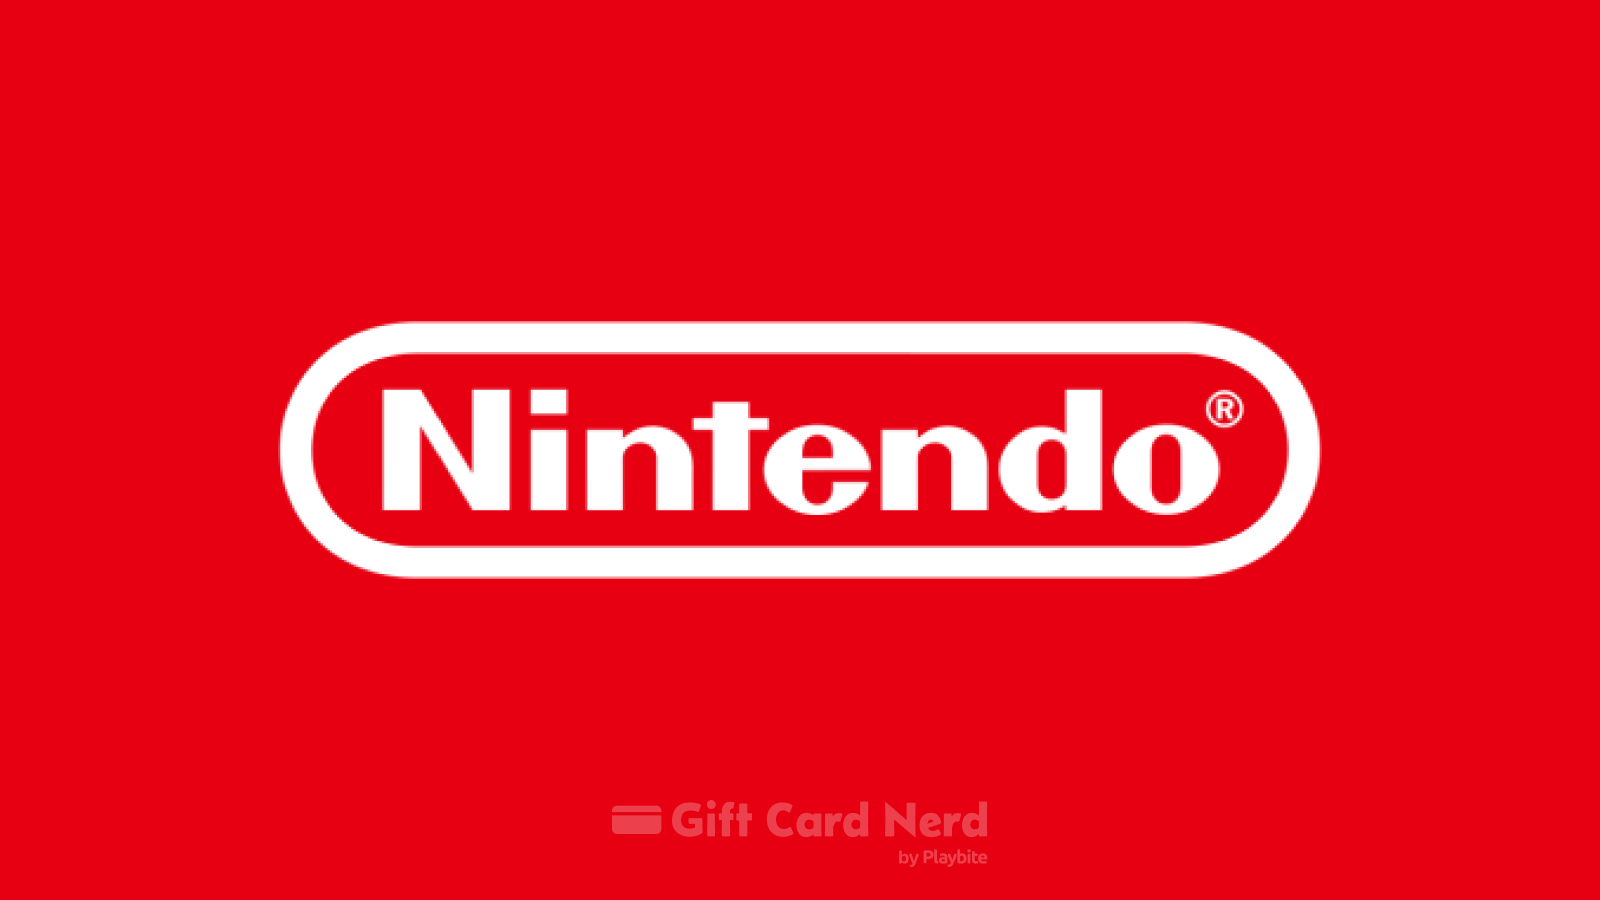 How to Check Your Nintendo Gift Card Balance